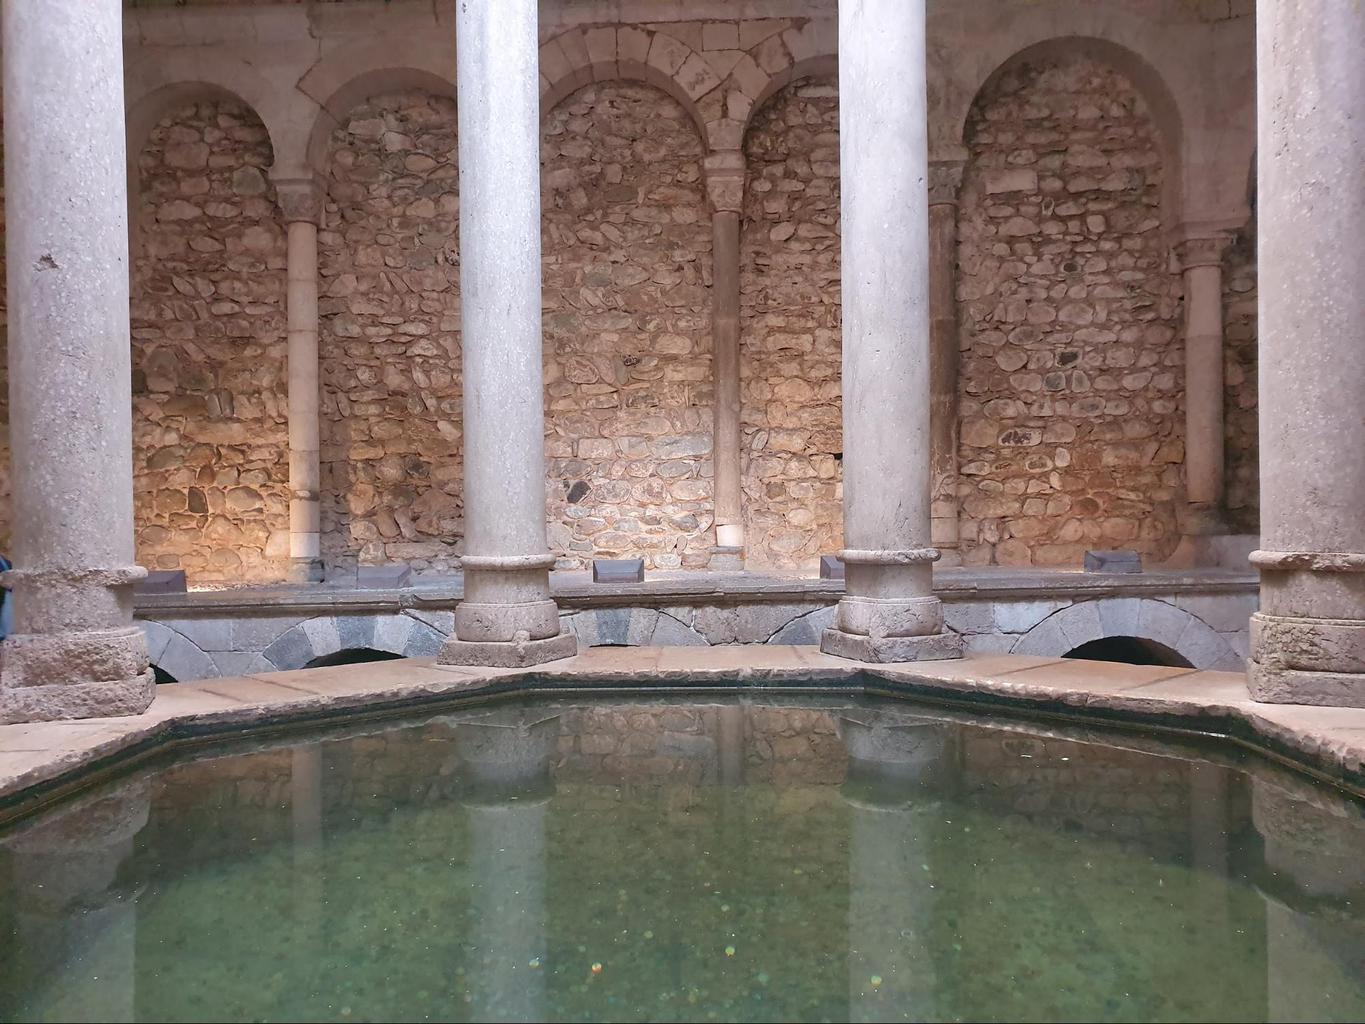 The changing room inside Girona’s Arab Baths